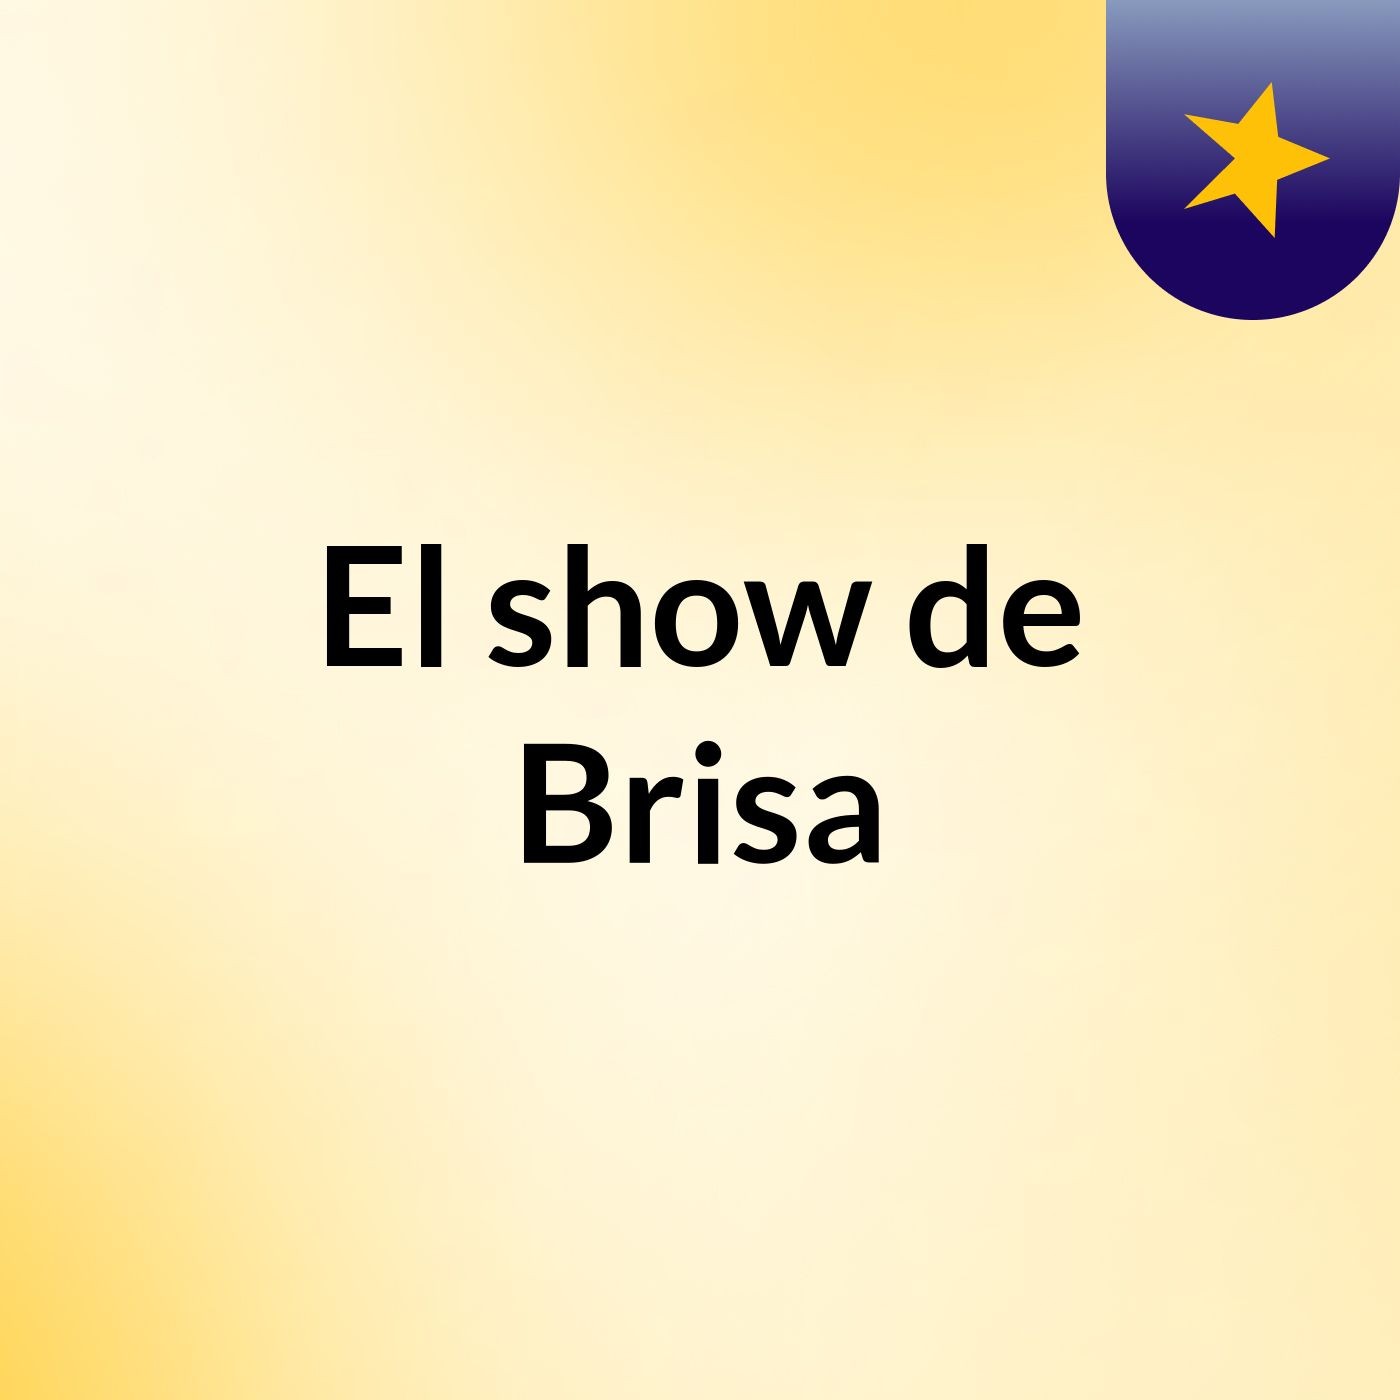 El show de Brisa